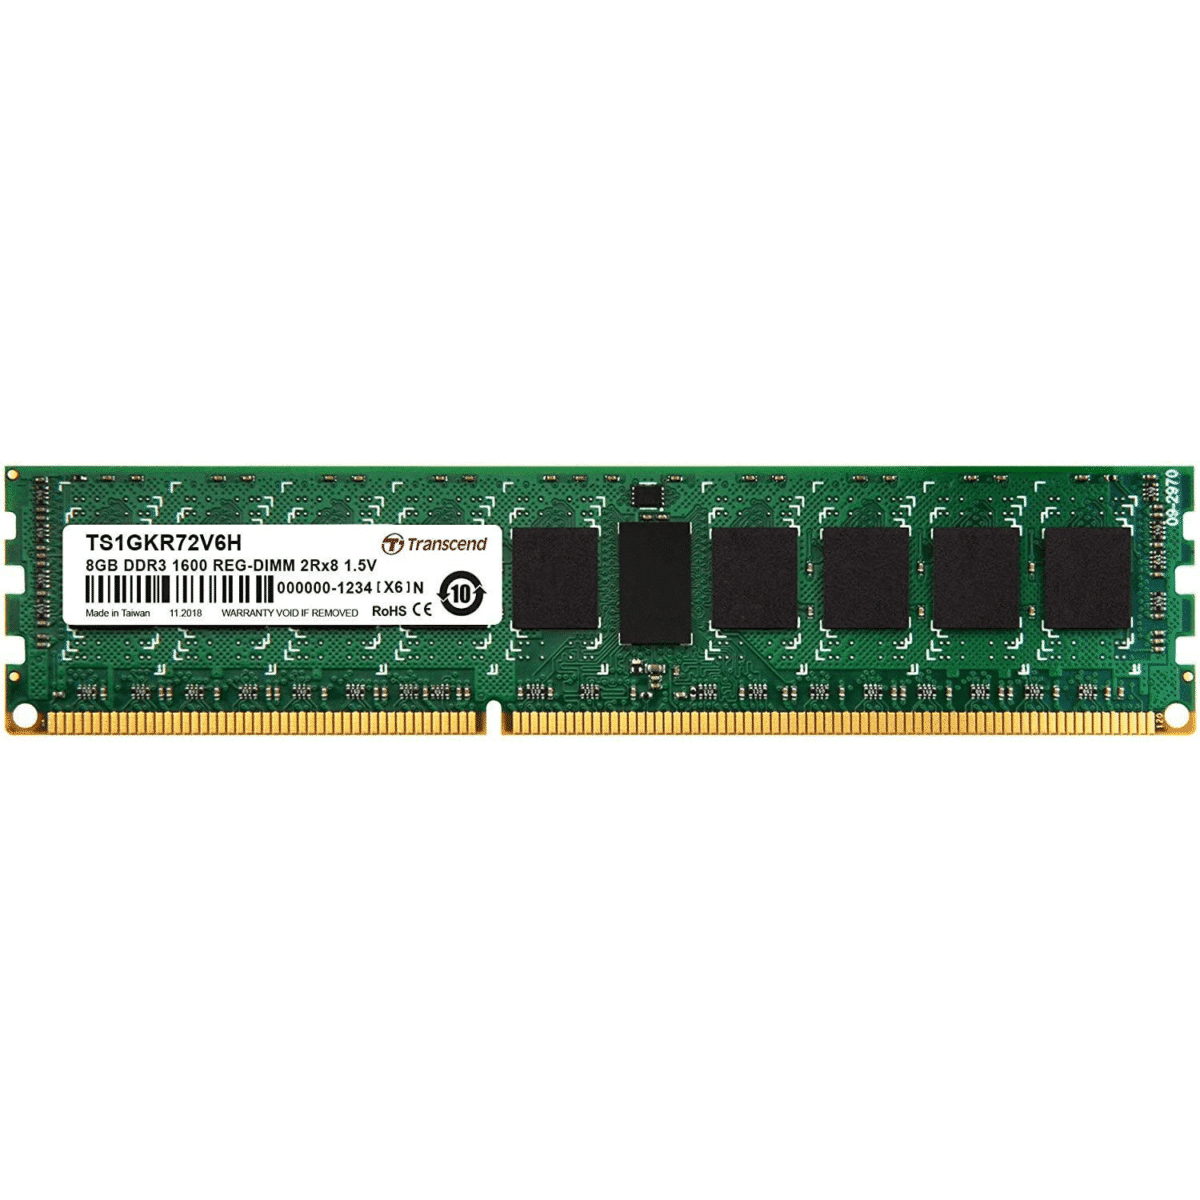 Transcend DDR3 8GB memory module 1600 MHz ECC TS1GKR72V6H